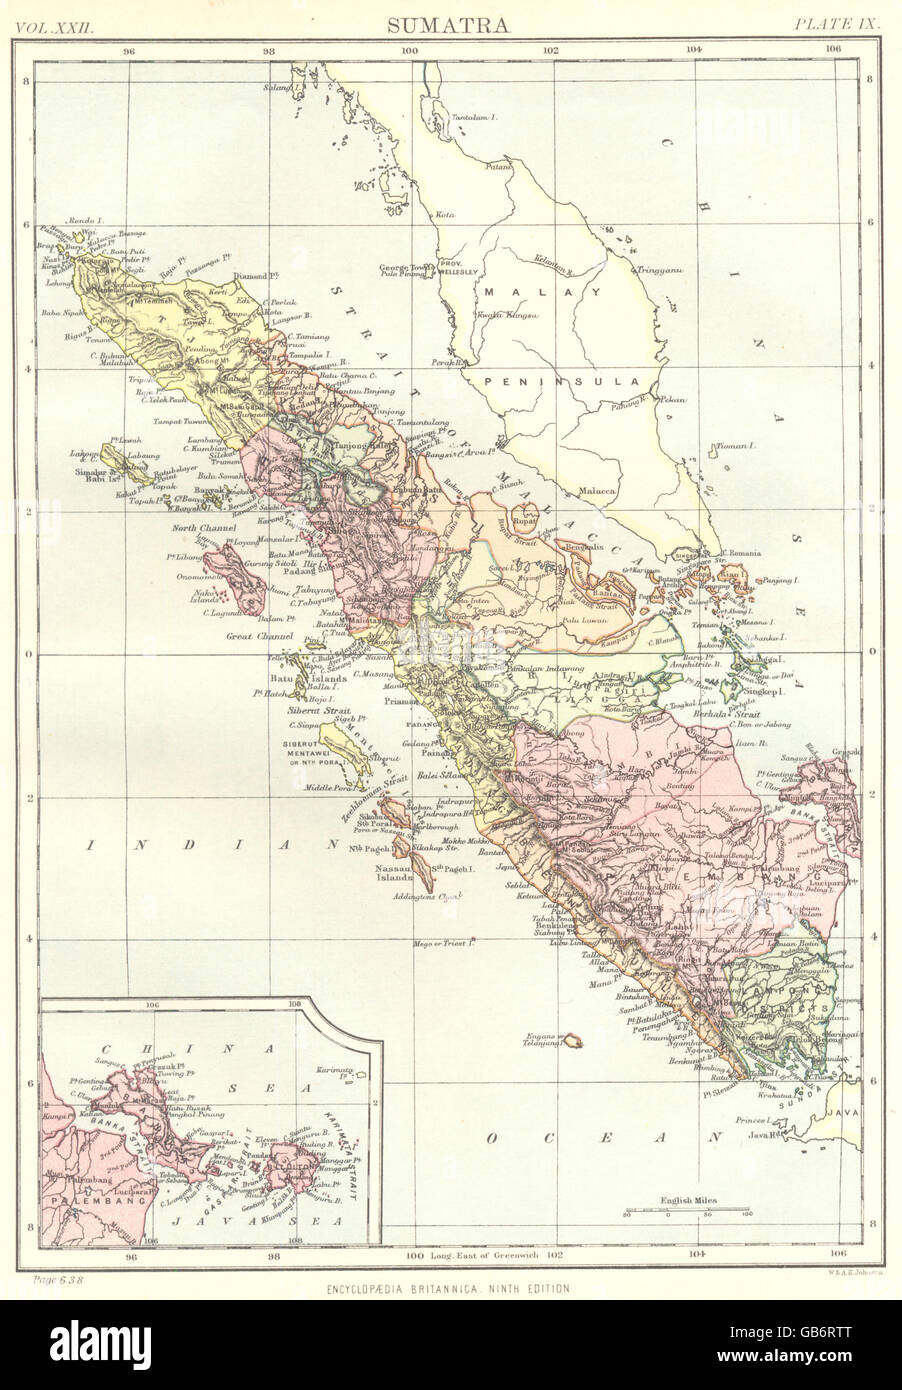 SUMATRA: Indonesia; Inset map of Bangka. Britannica 9th edition, 1898 Stock Photo